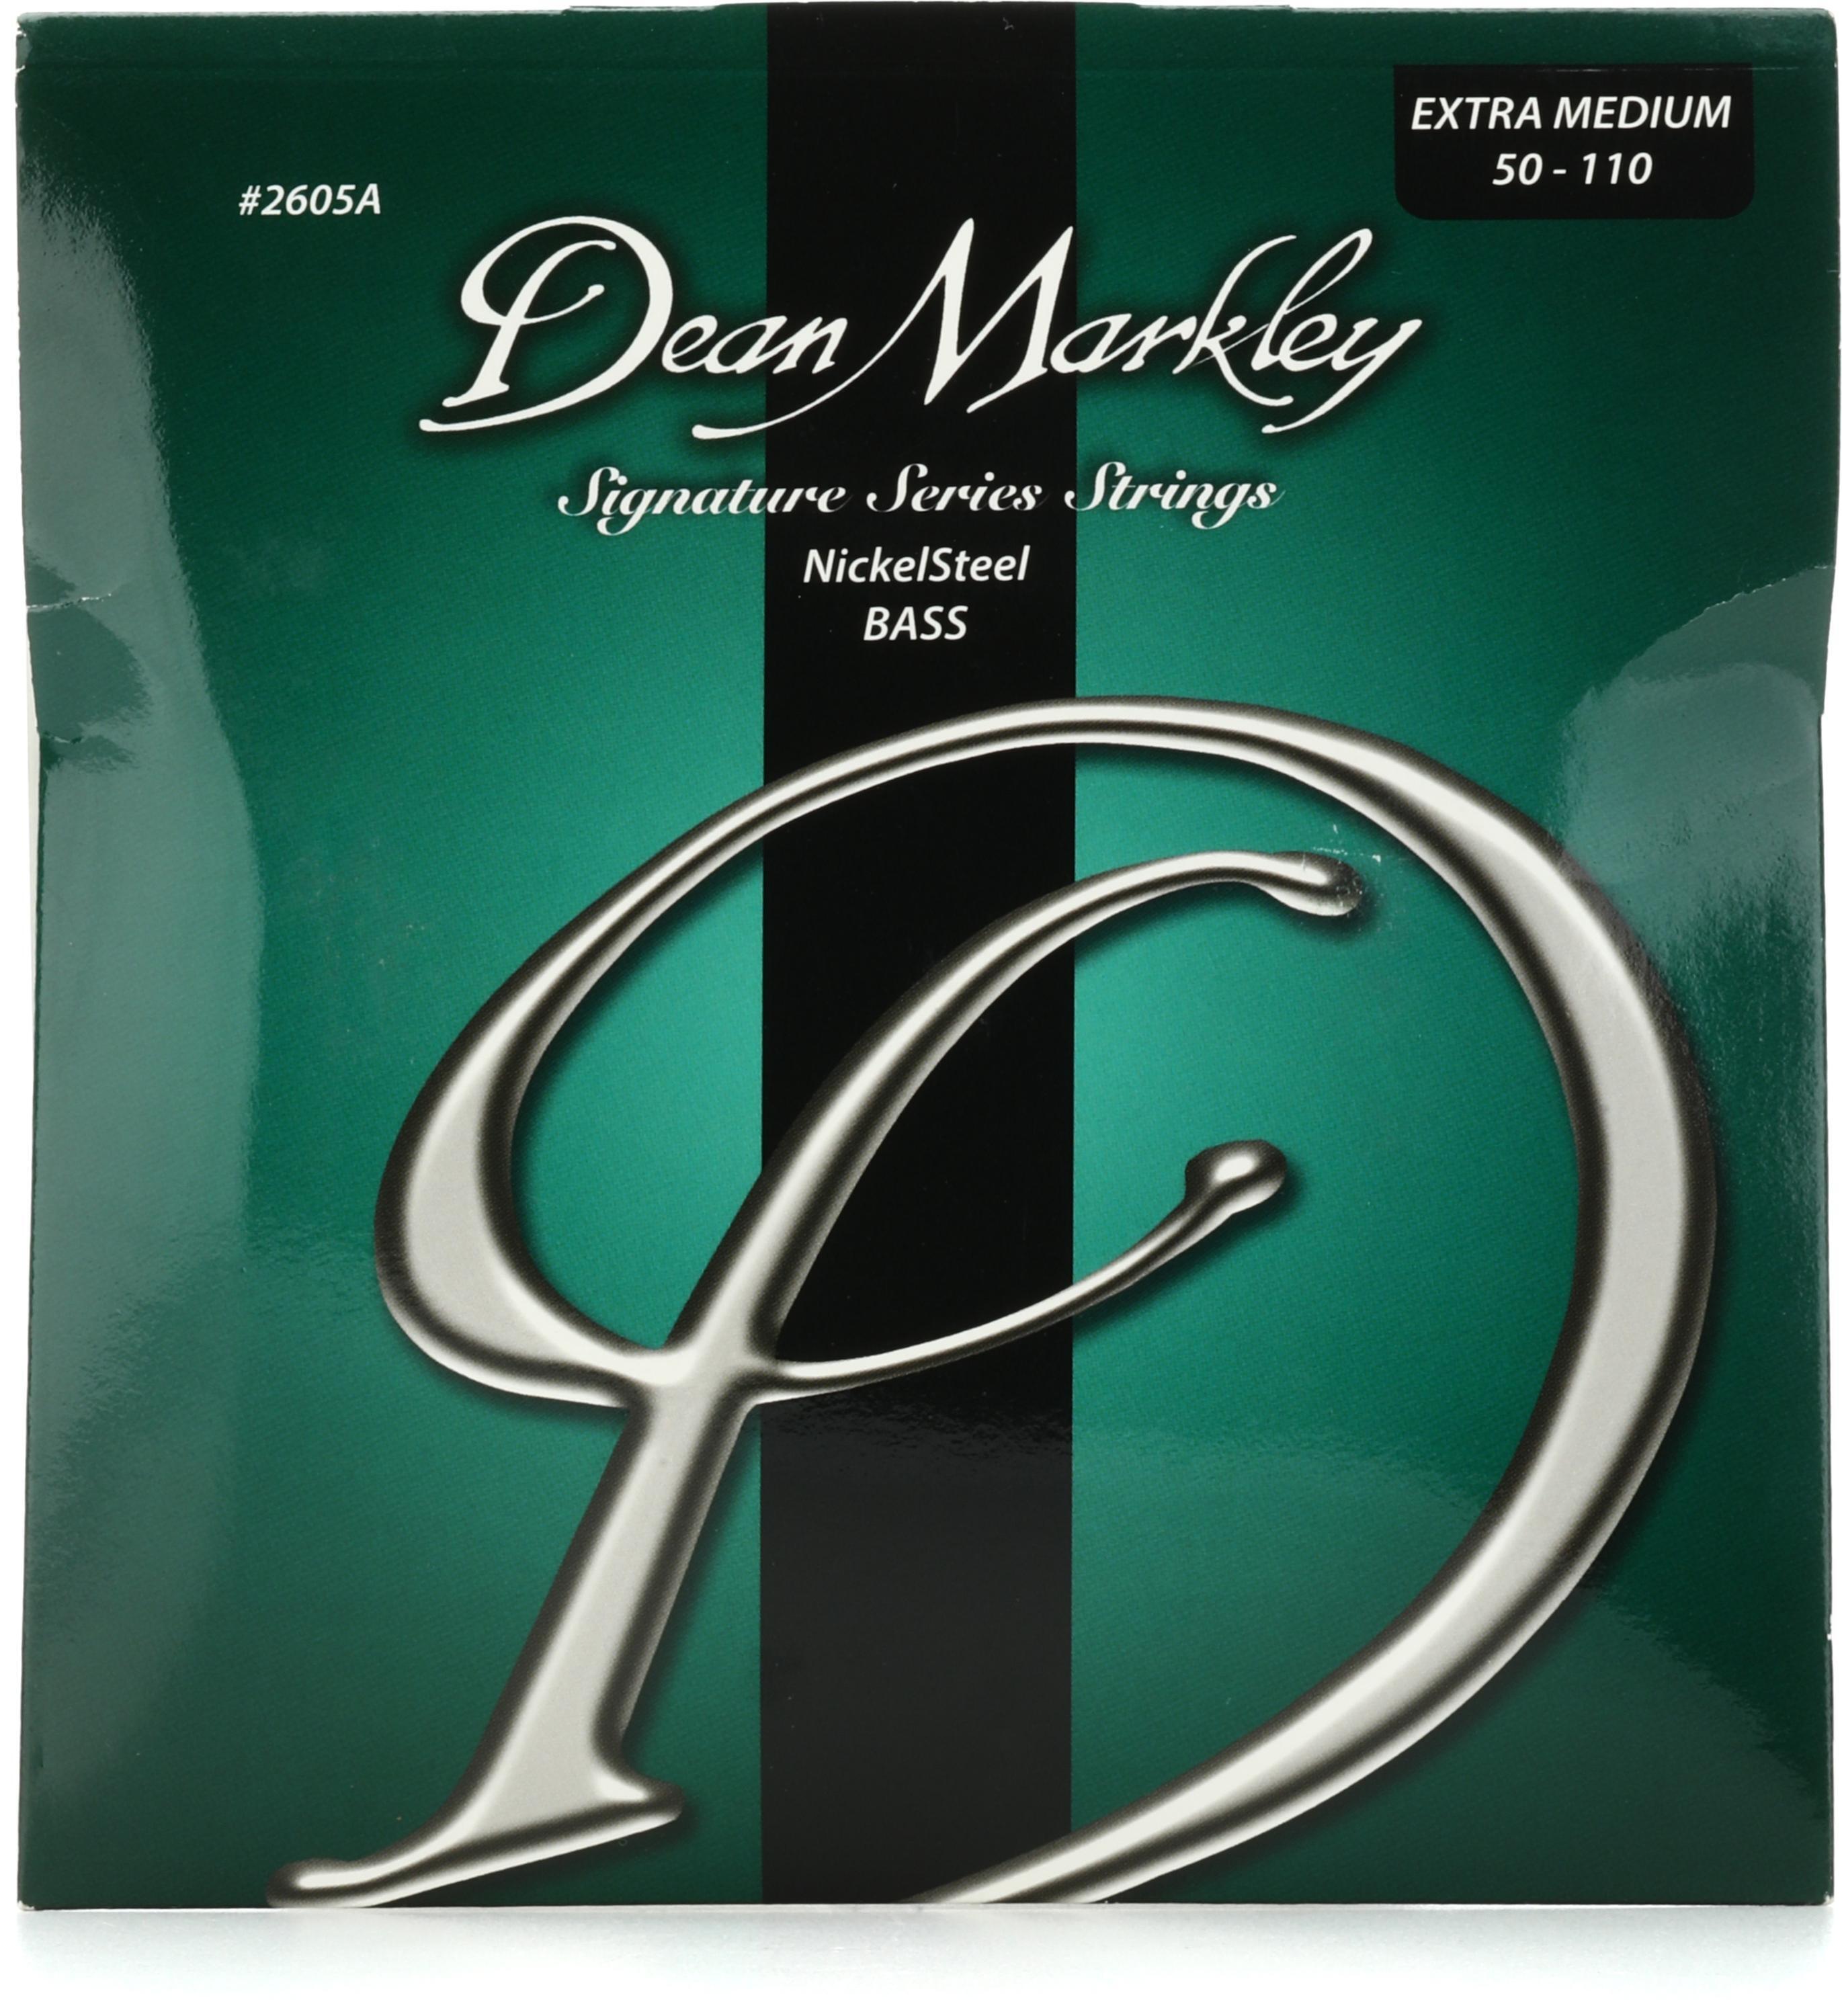 Bundled Item: Dean Markley NickelSteel Signature Series Bass Guitar Strings - Extra Medium, 4-string, .050-.110